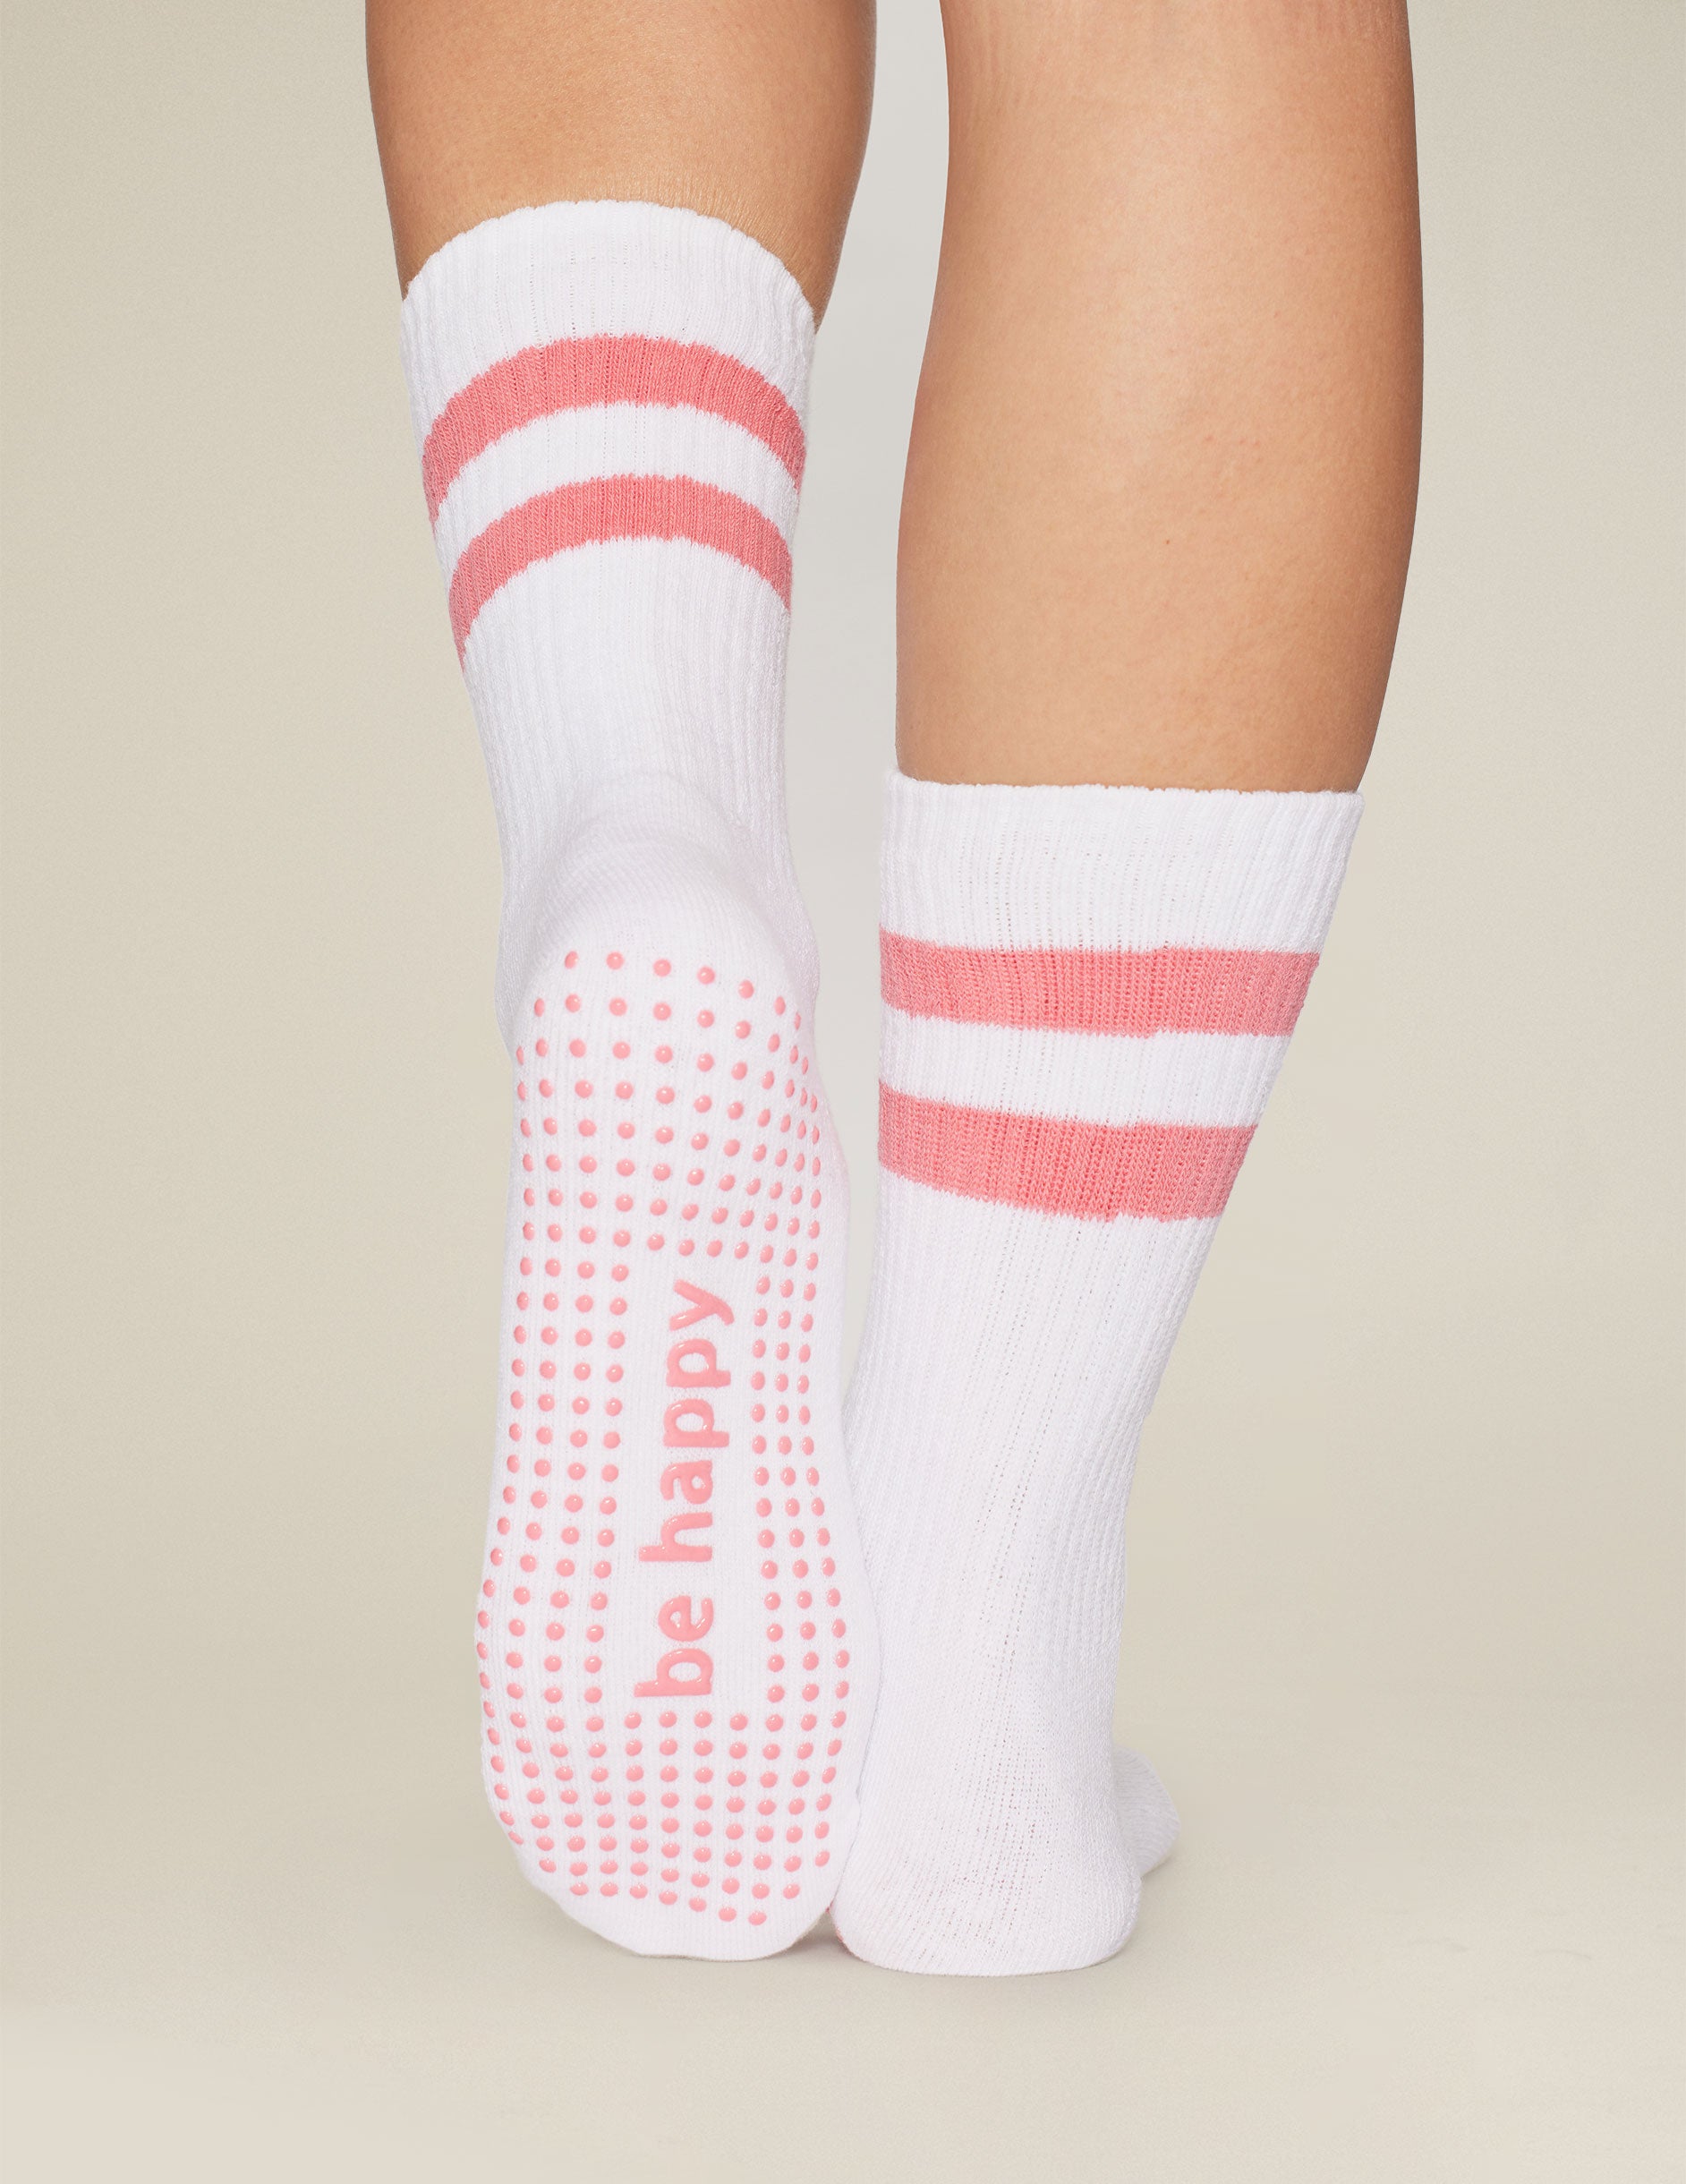 white crew neck socks with pink stripes.